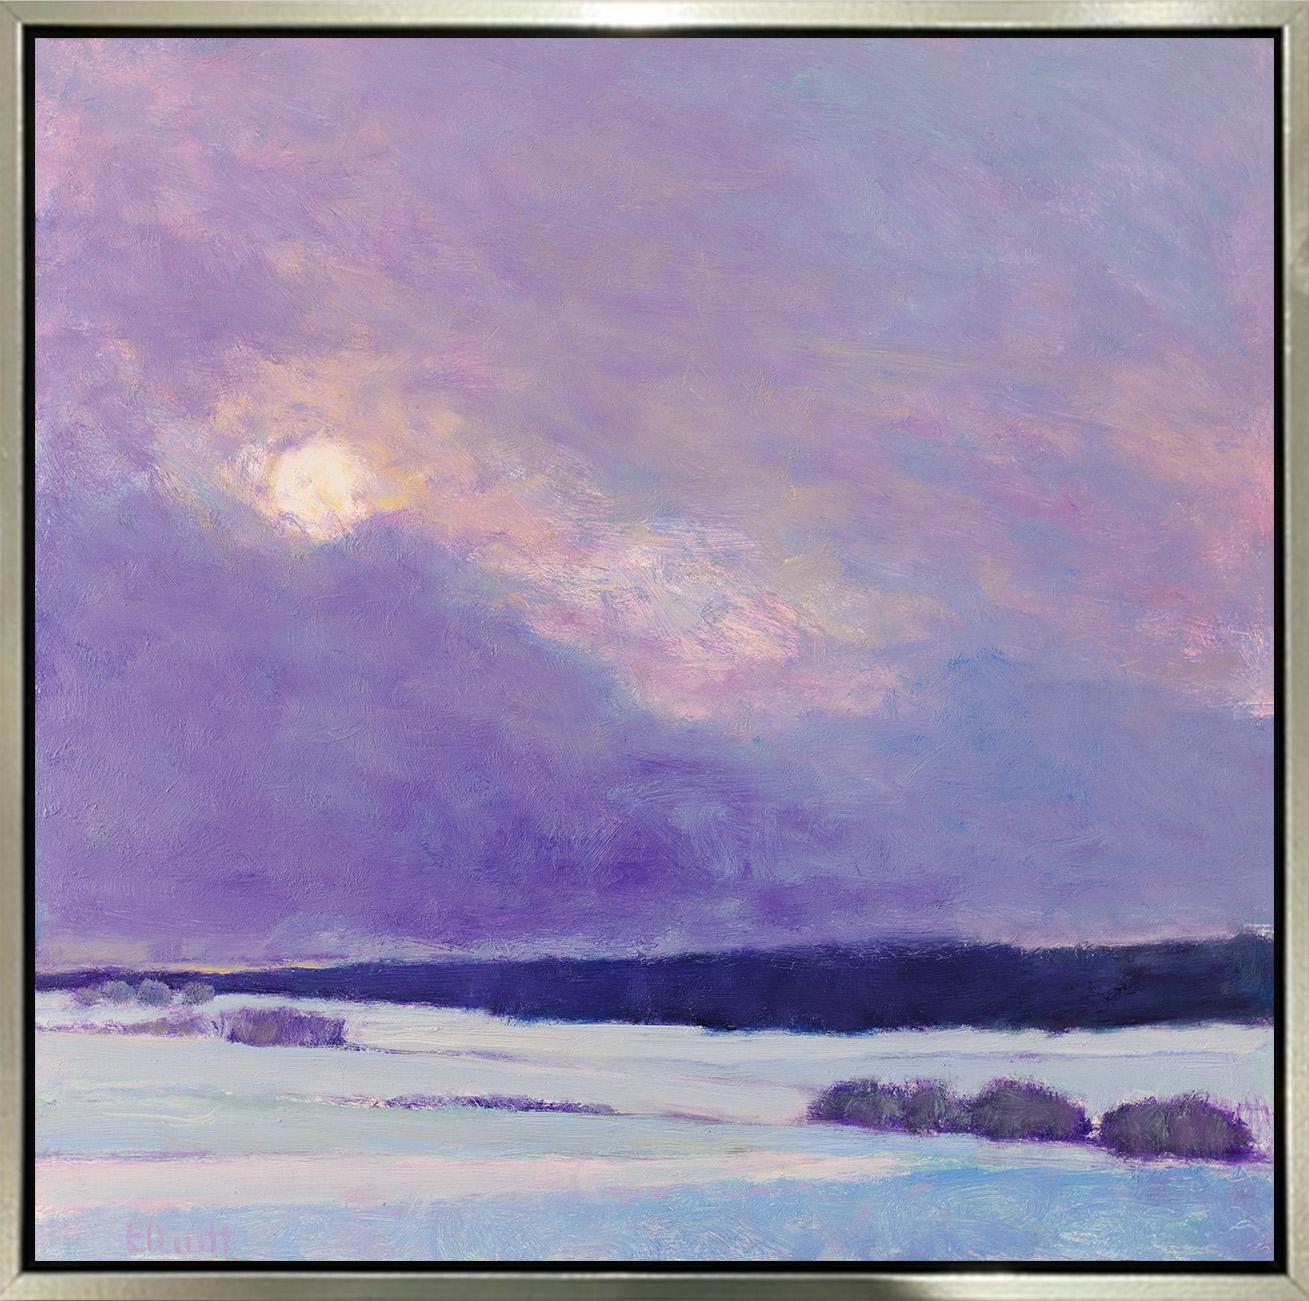 Ken Elliott Landscape Print - "Sun on Snow II, " Framed Limited Edition Giclee Print, 48" x 48"